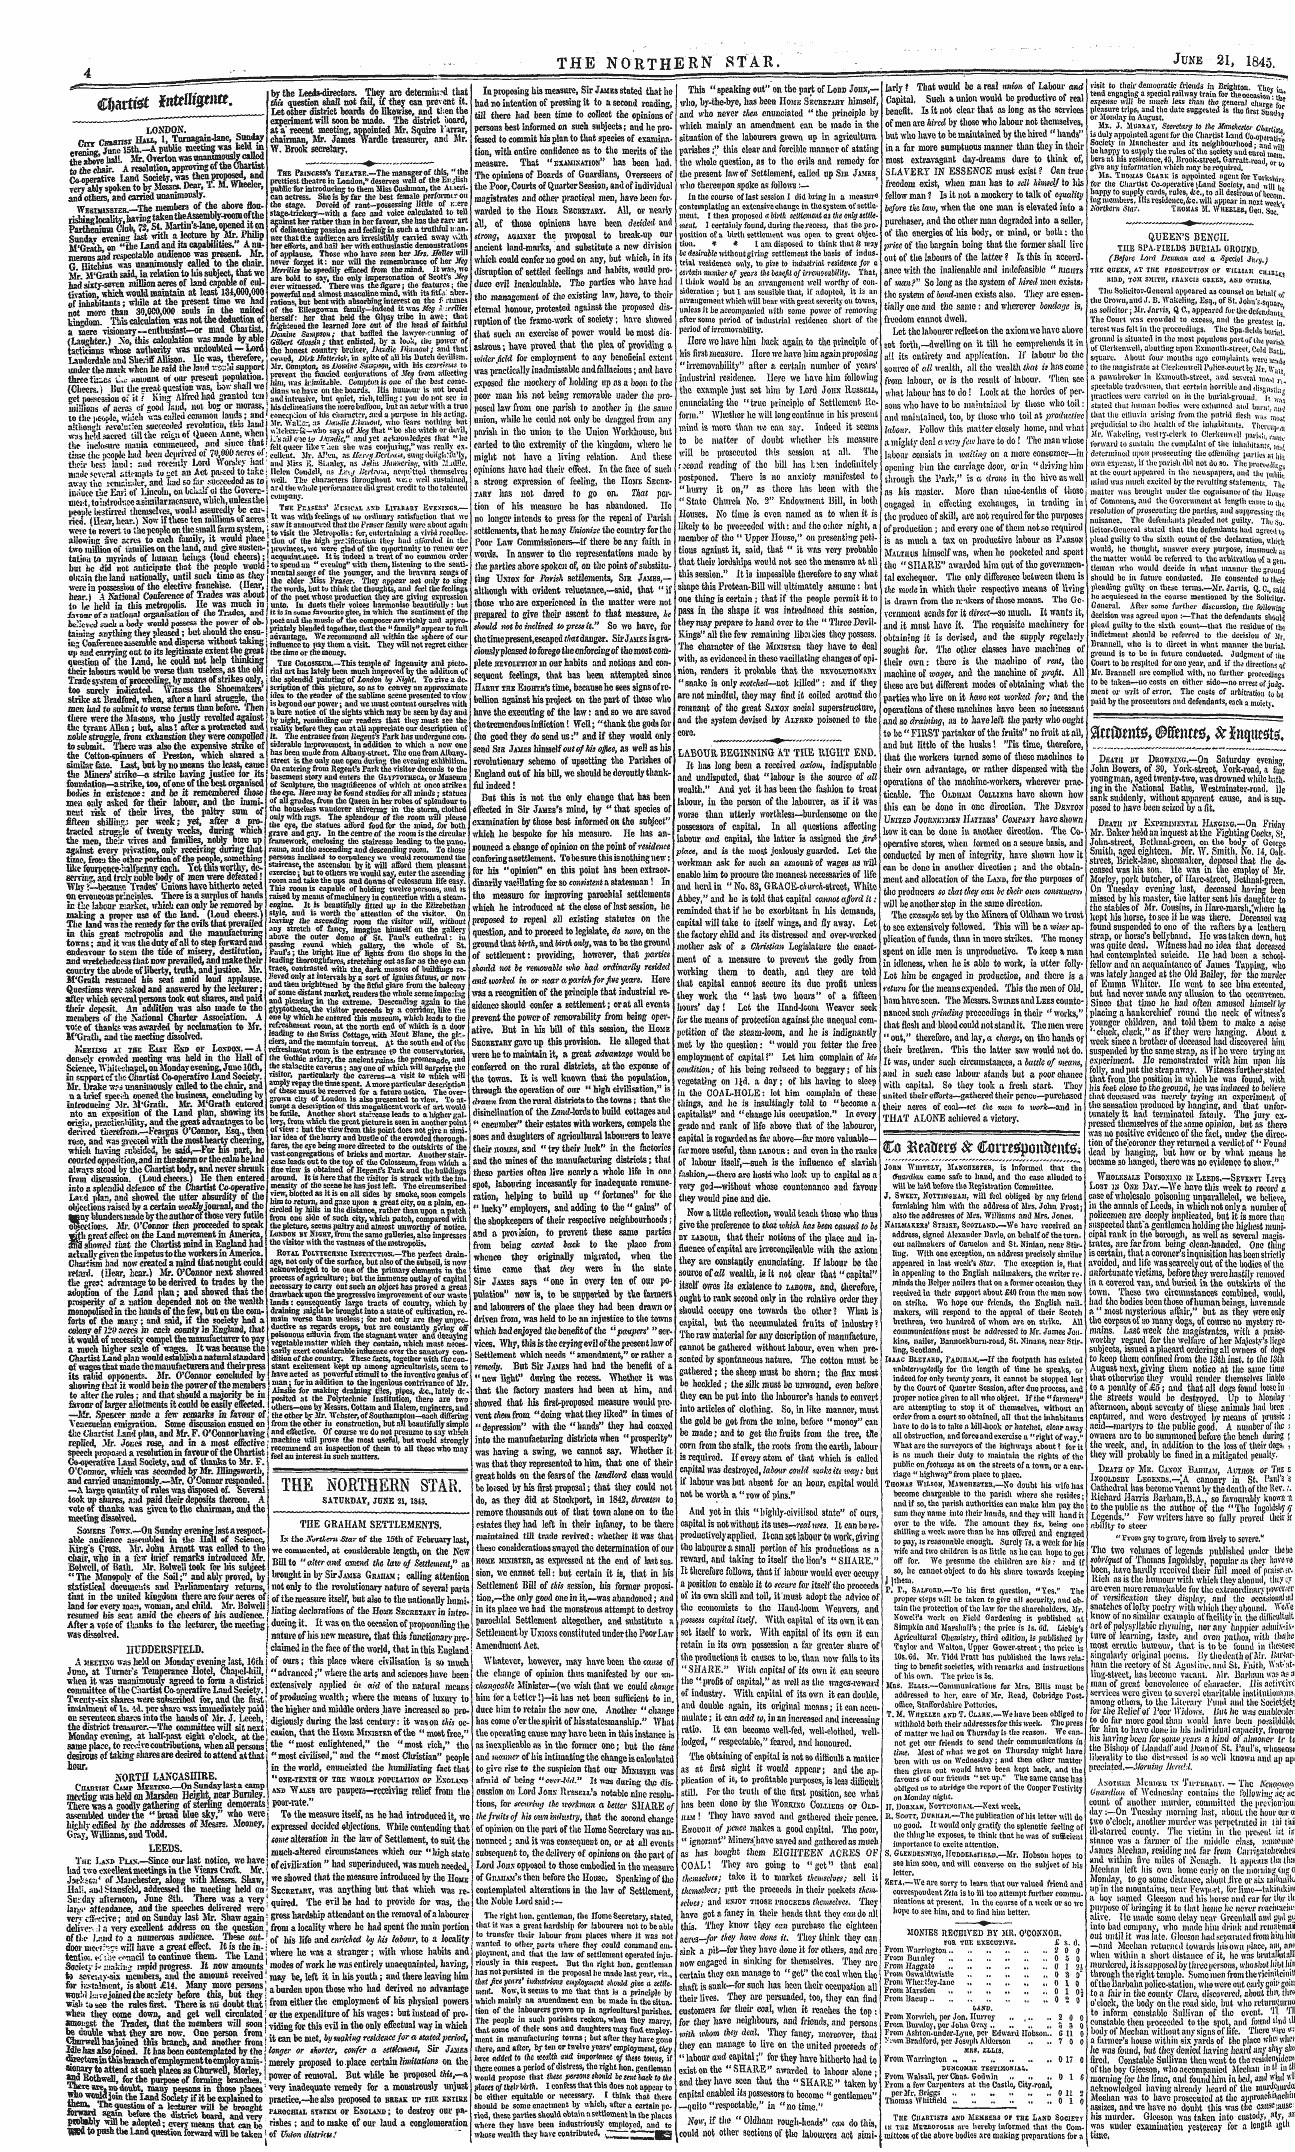 Northern Star (1837-1852): jS F Y, 3rd edition - Co Ftea&Ersi $C Corttsfpoi^Ente*